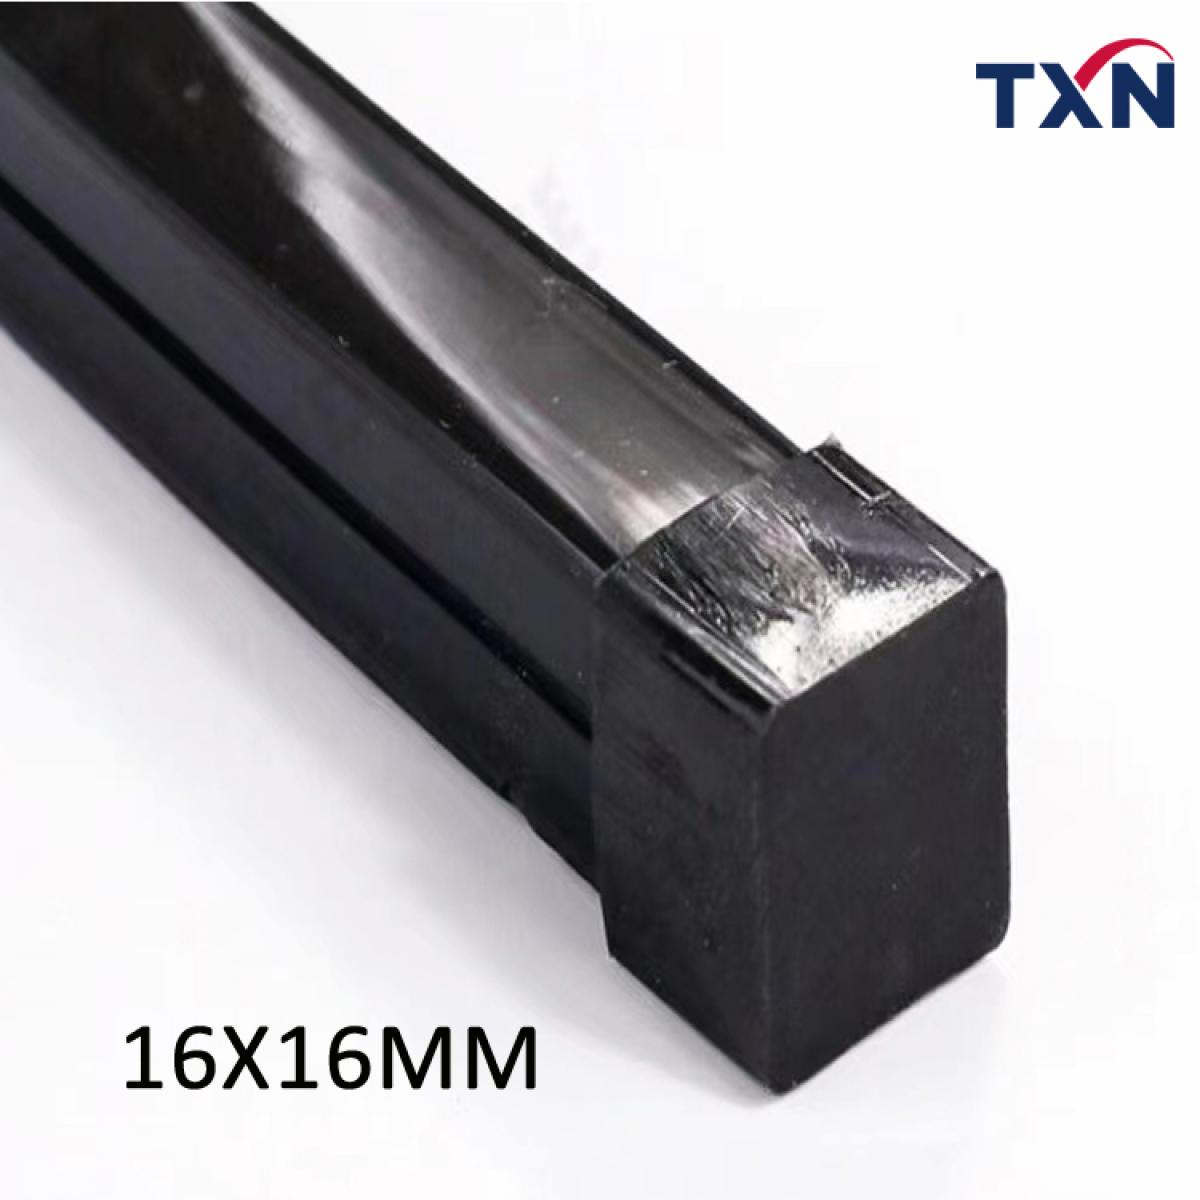 TXN-1616B New Product All Black LED Neon Tube Light 16X16MM